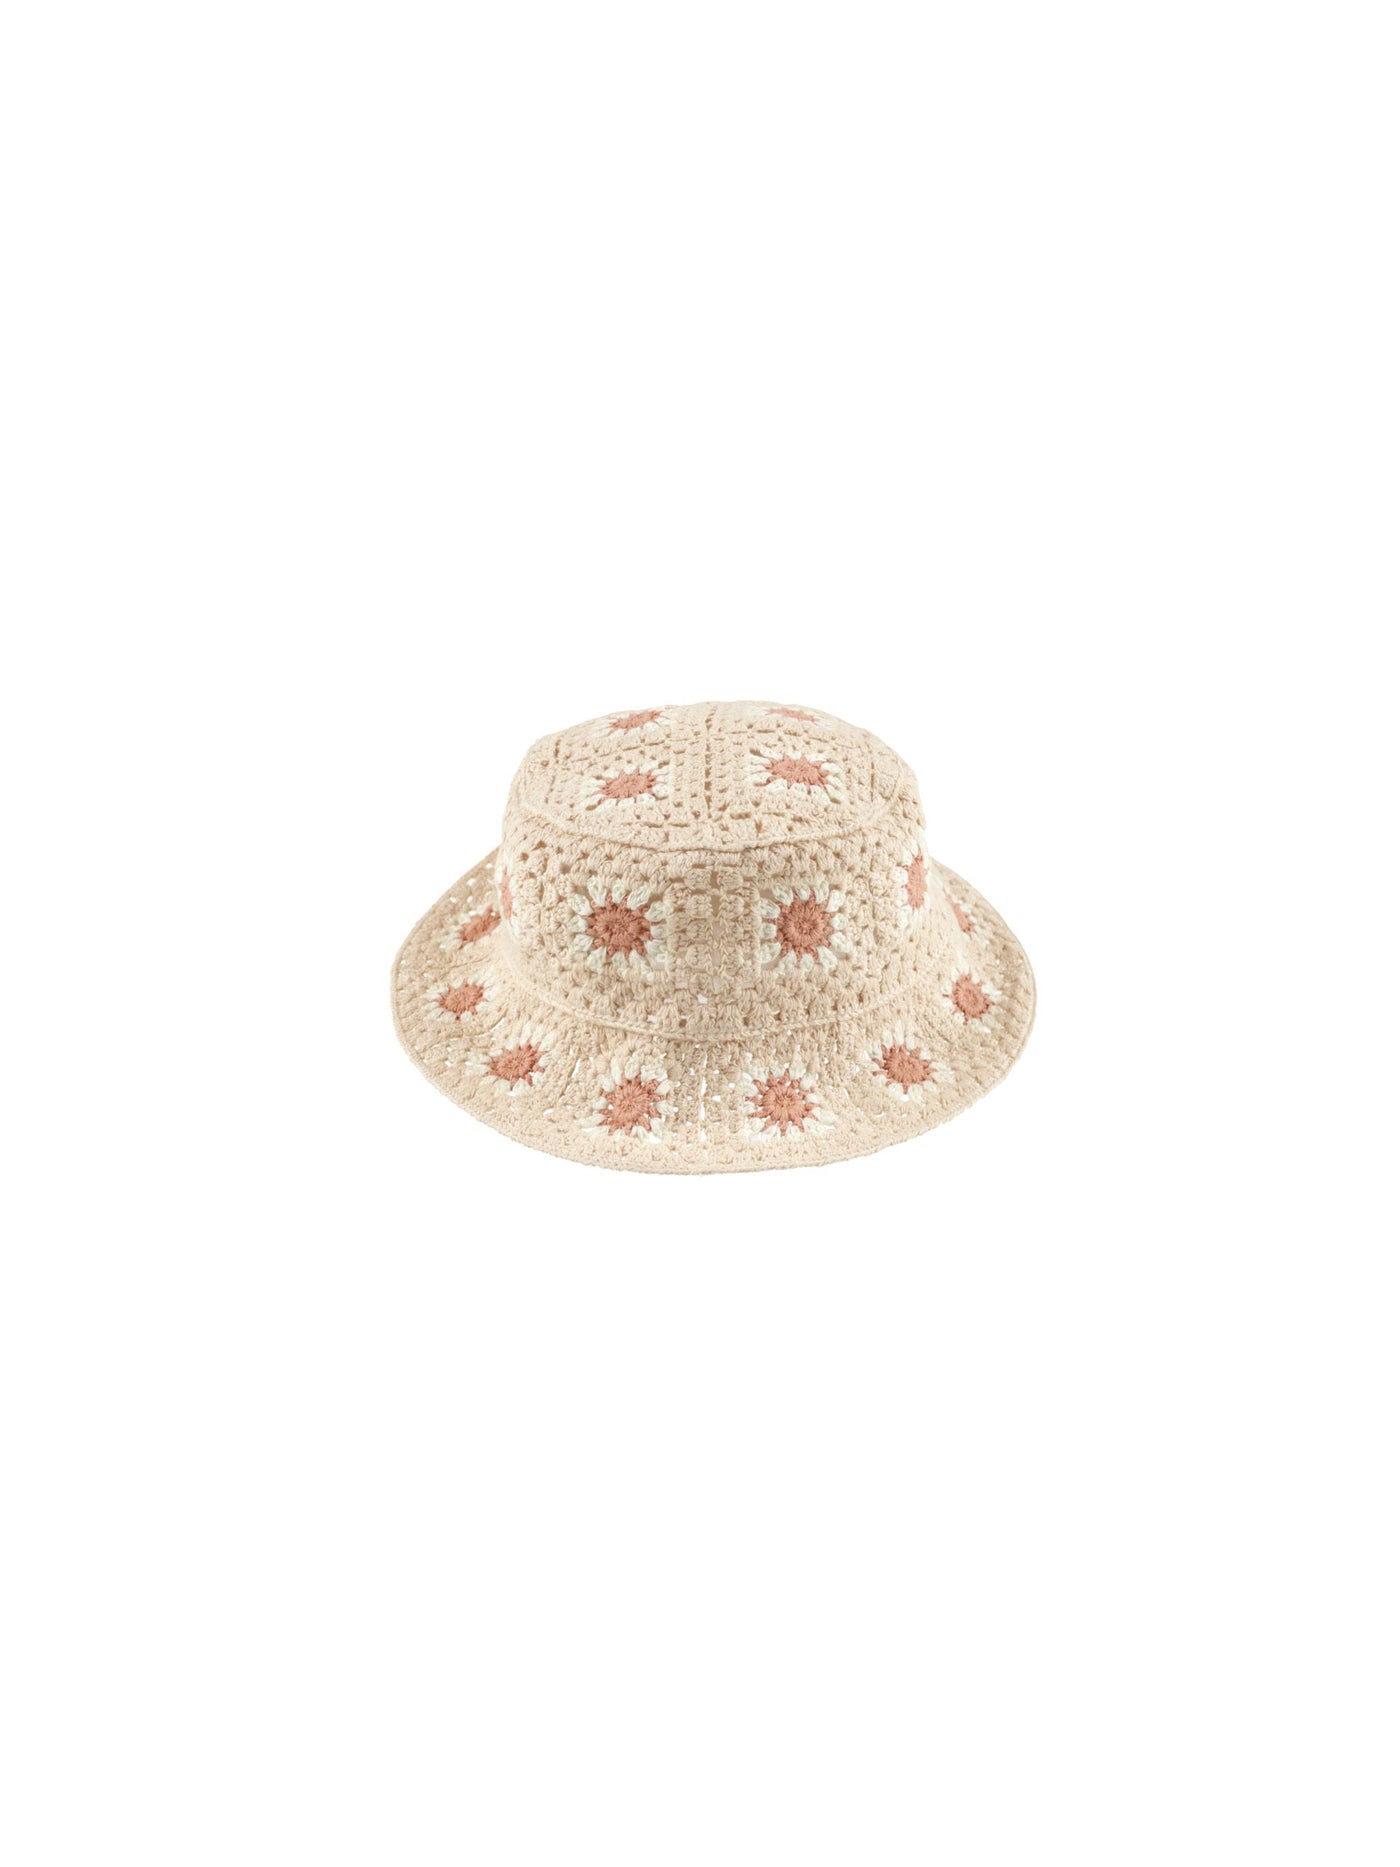 Crochet Bucket Hat - Floral